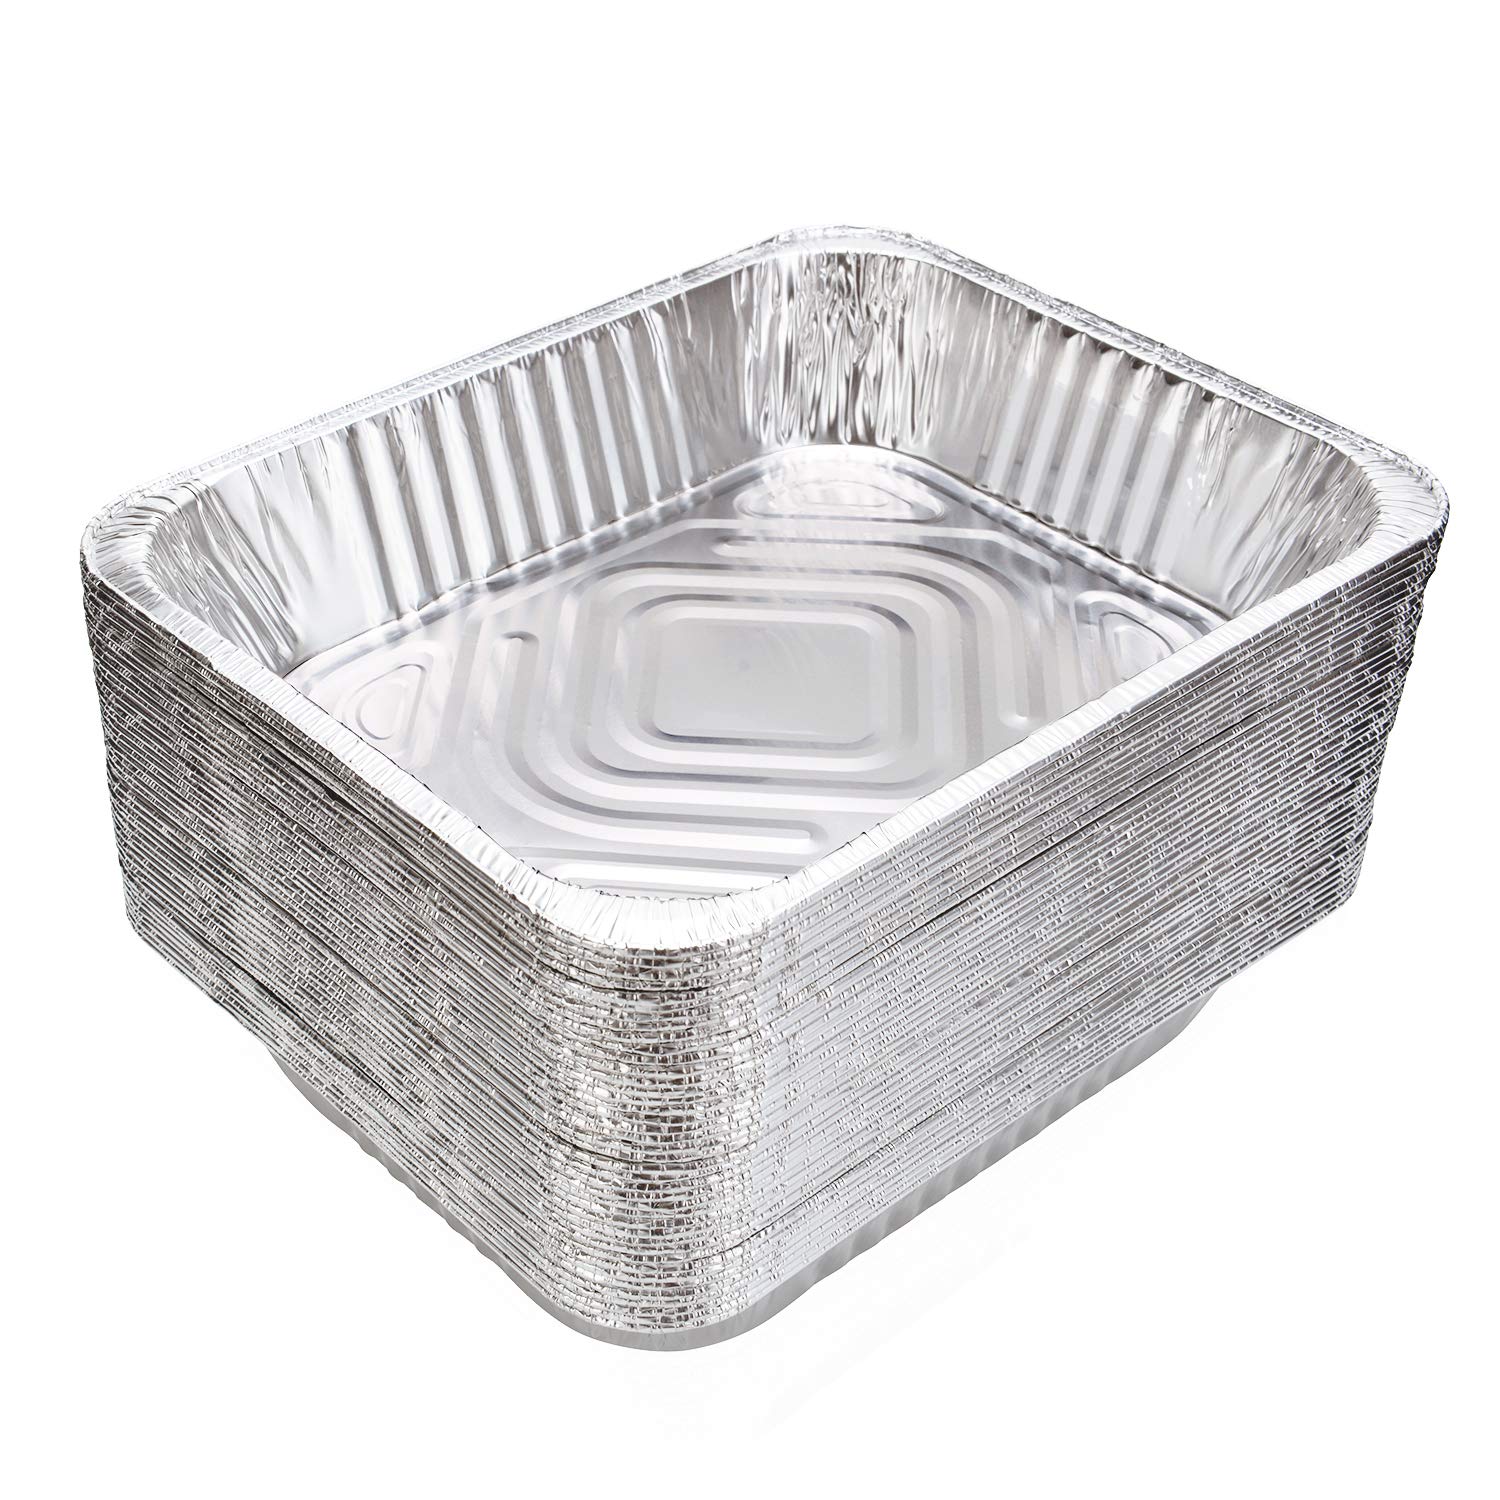 Aluminum 9x13 Cake Pan | NESCO